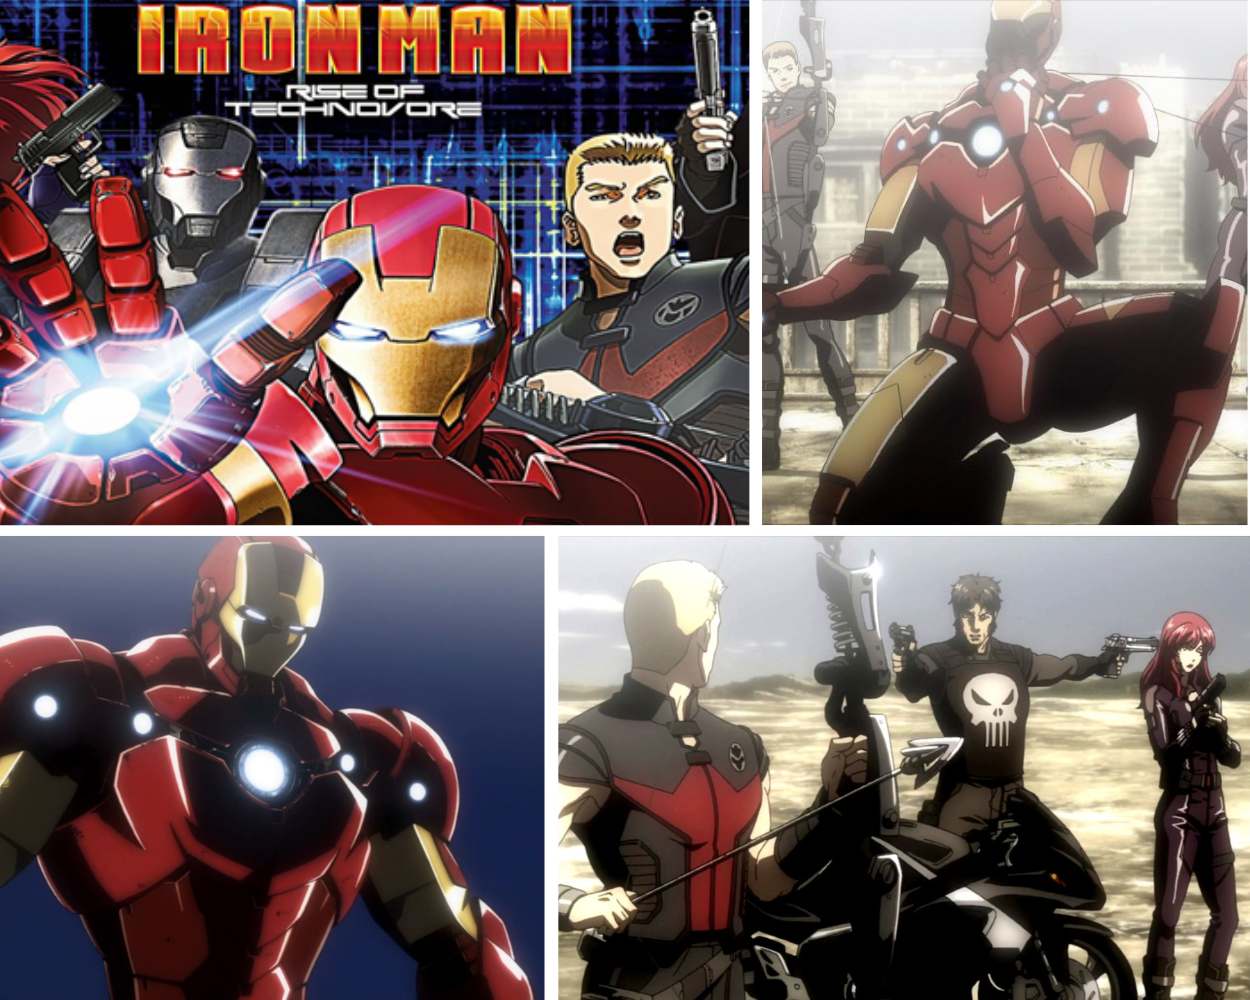 Iron Man Rise of Technovore (2013)